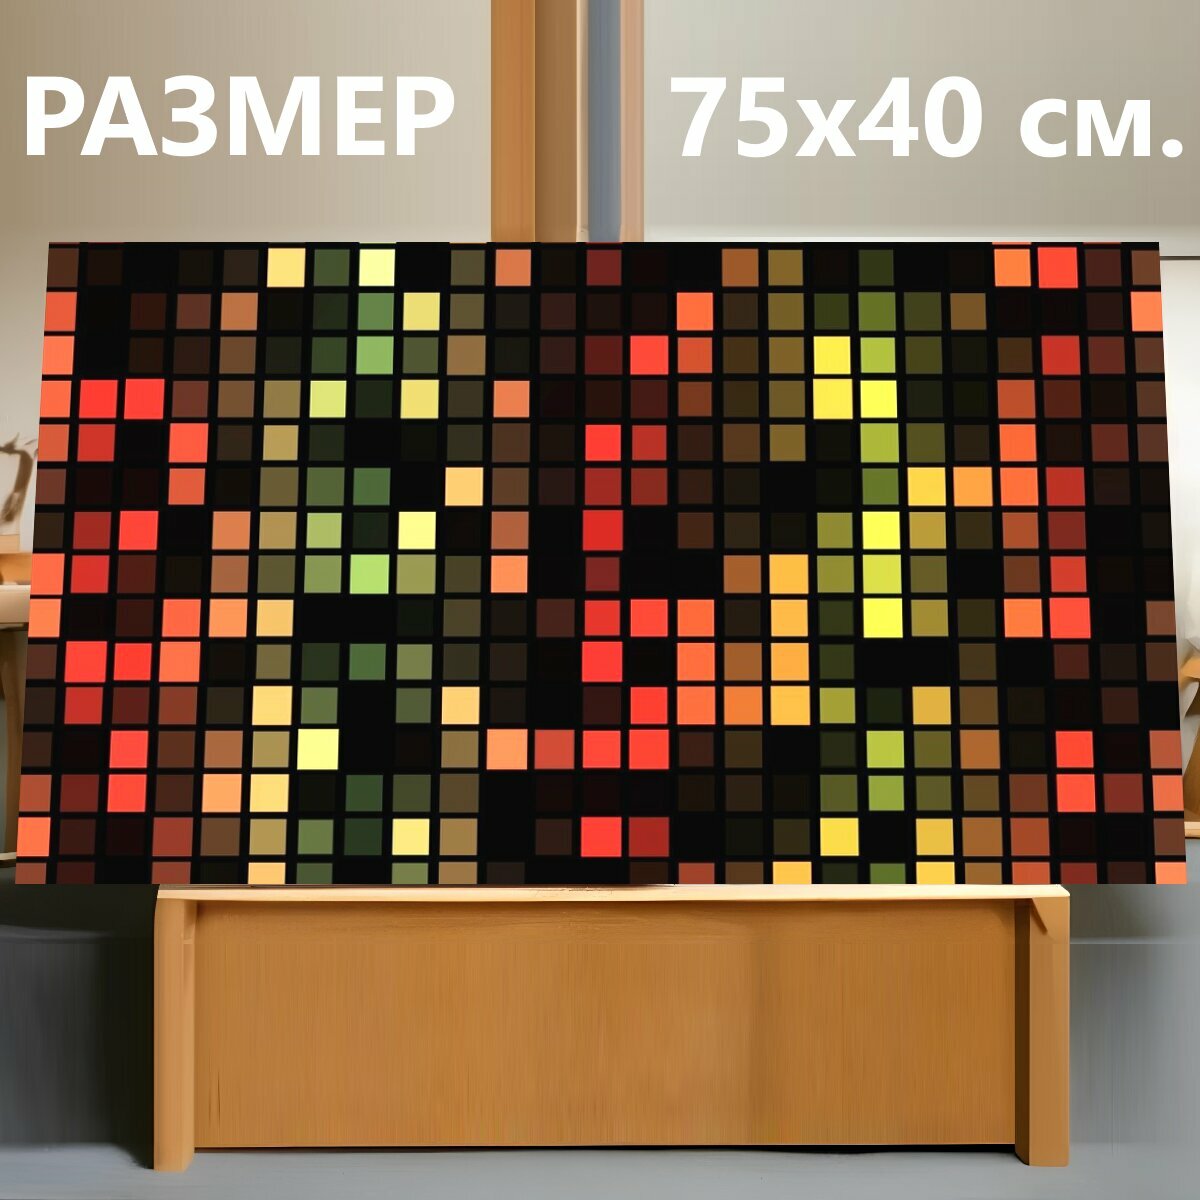 Картина на холсте "Мозаика, плитка, пиксели" на подрамнике 75х40 см. для интерьера